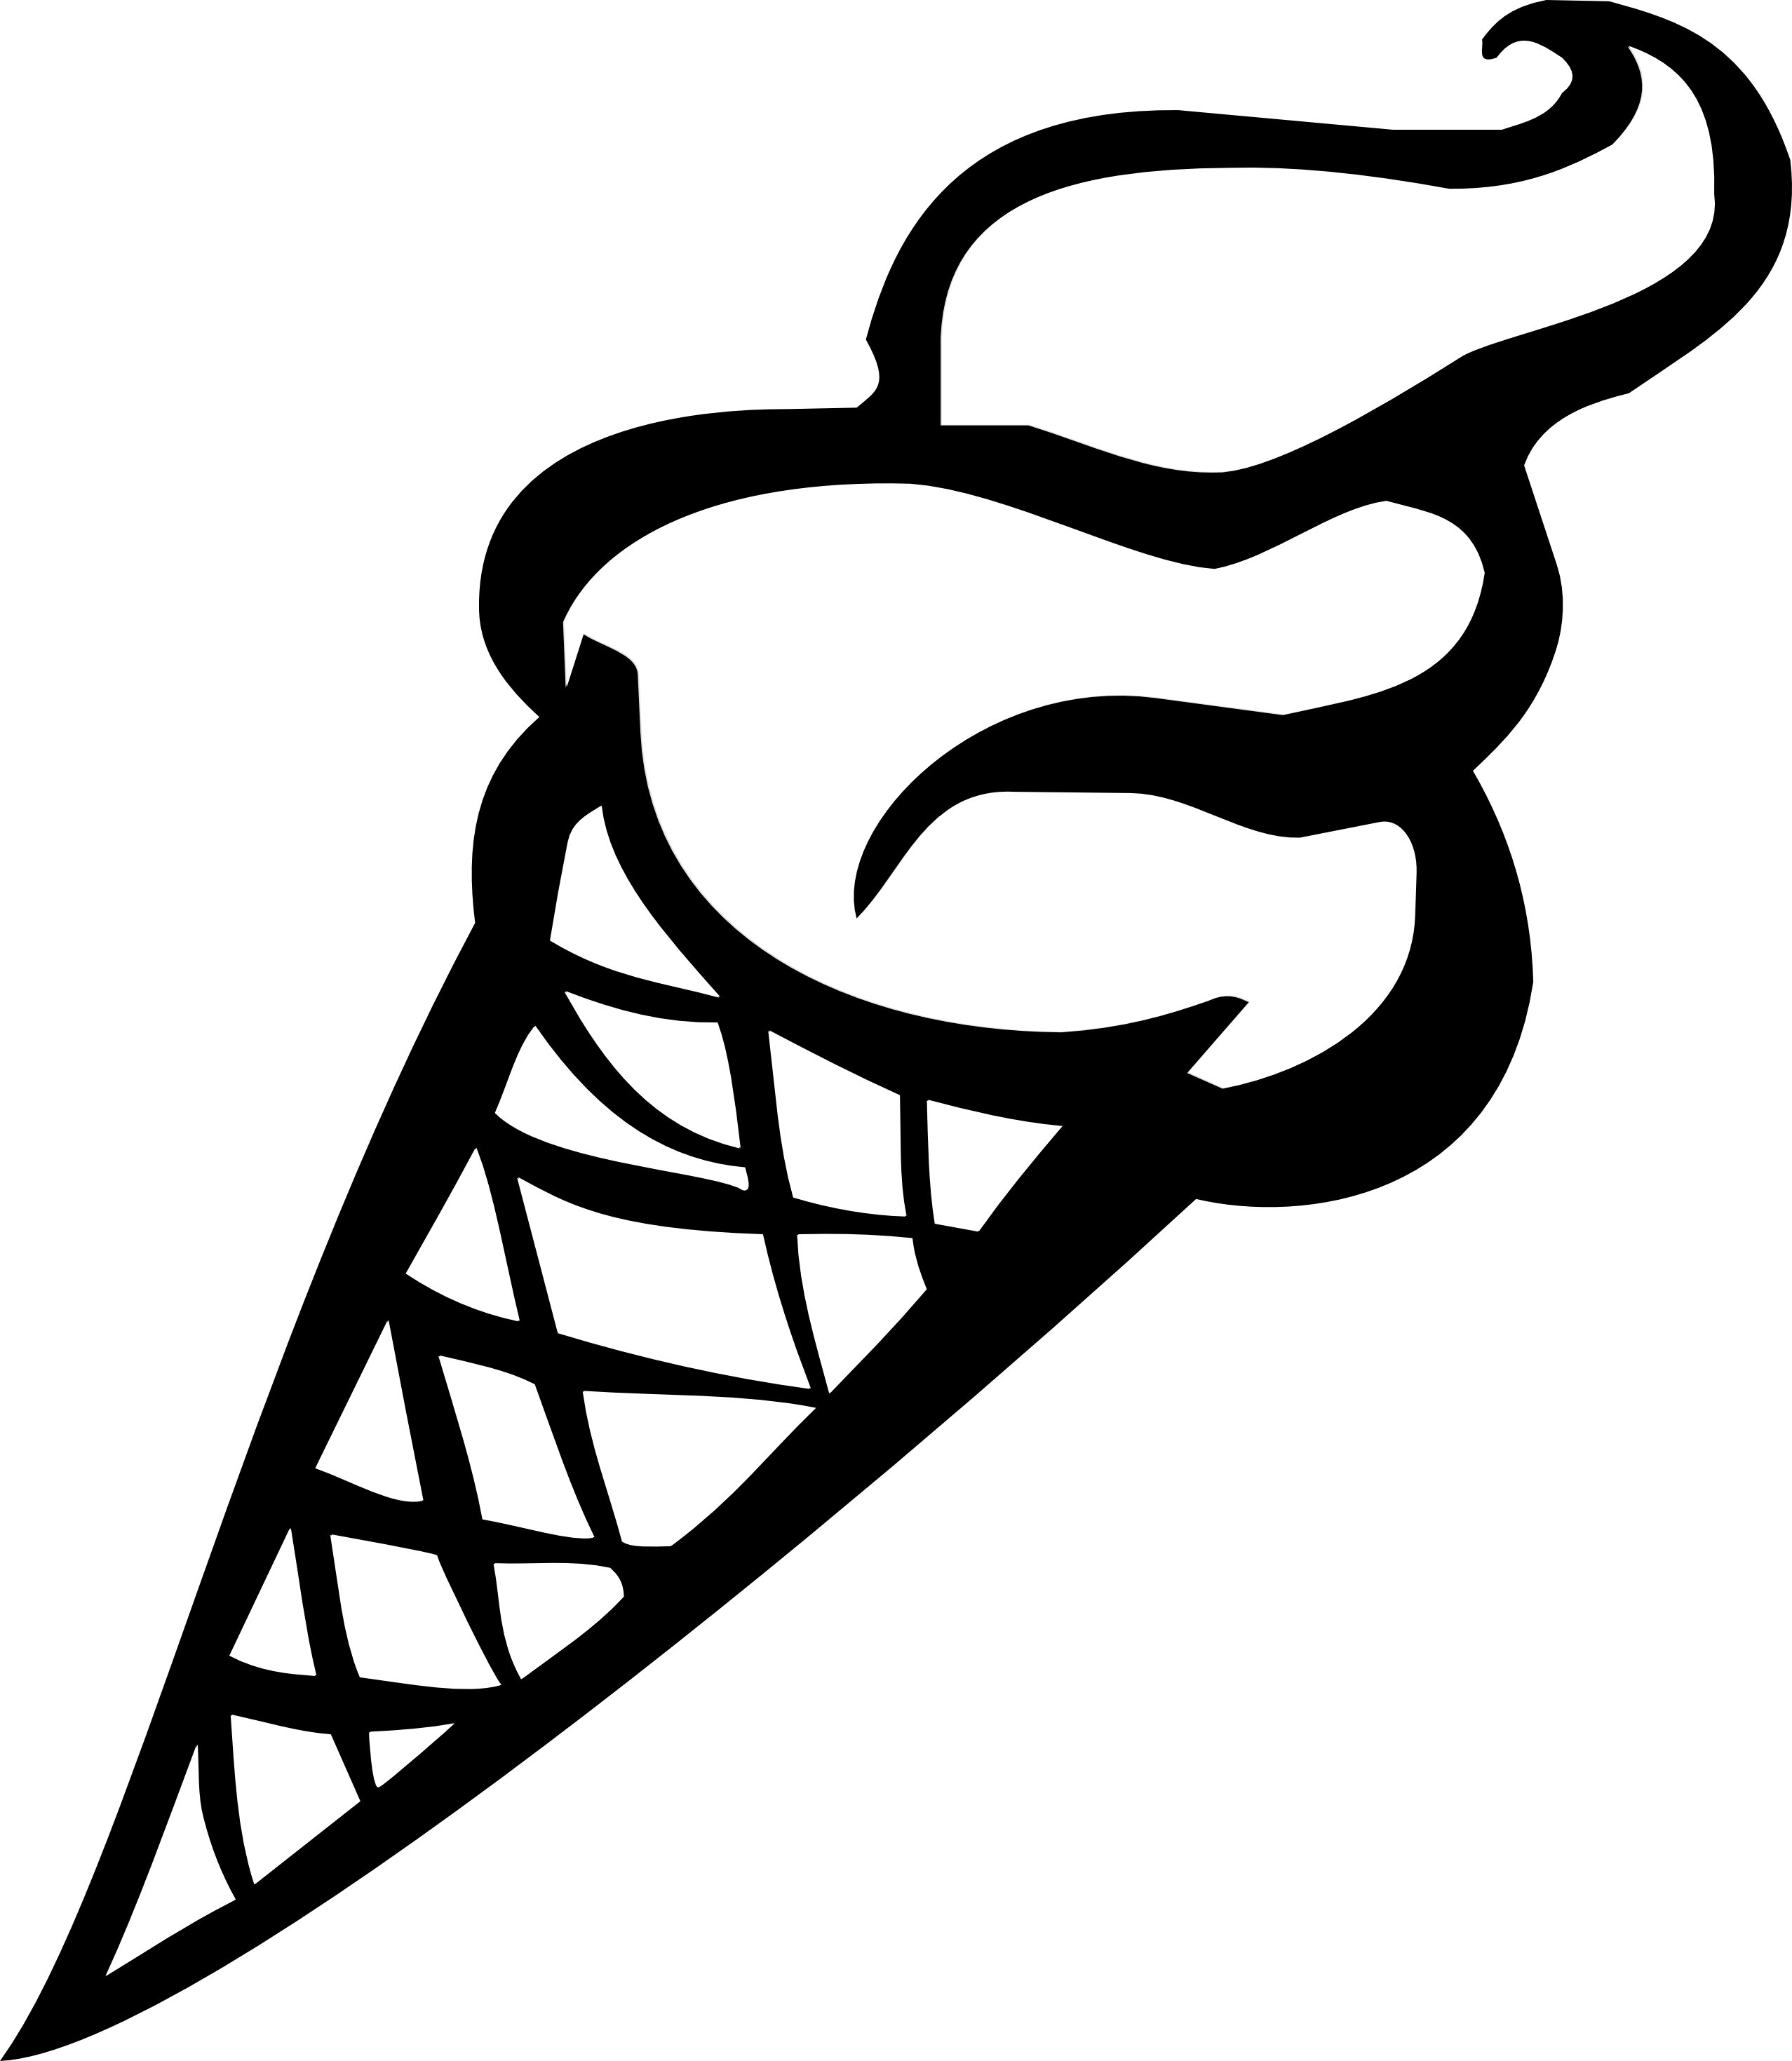 Icecream Cone PNG Black And White - 150280